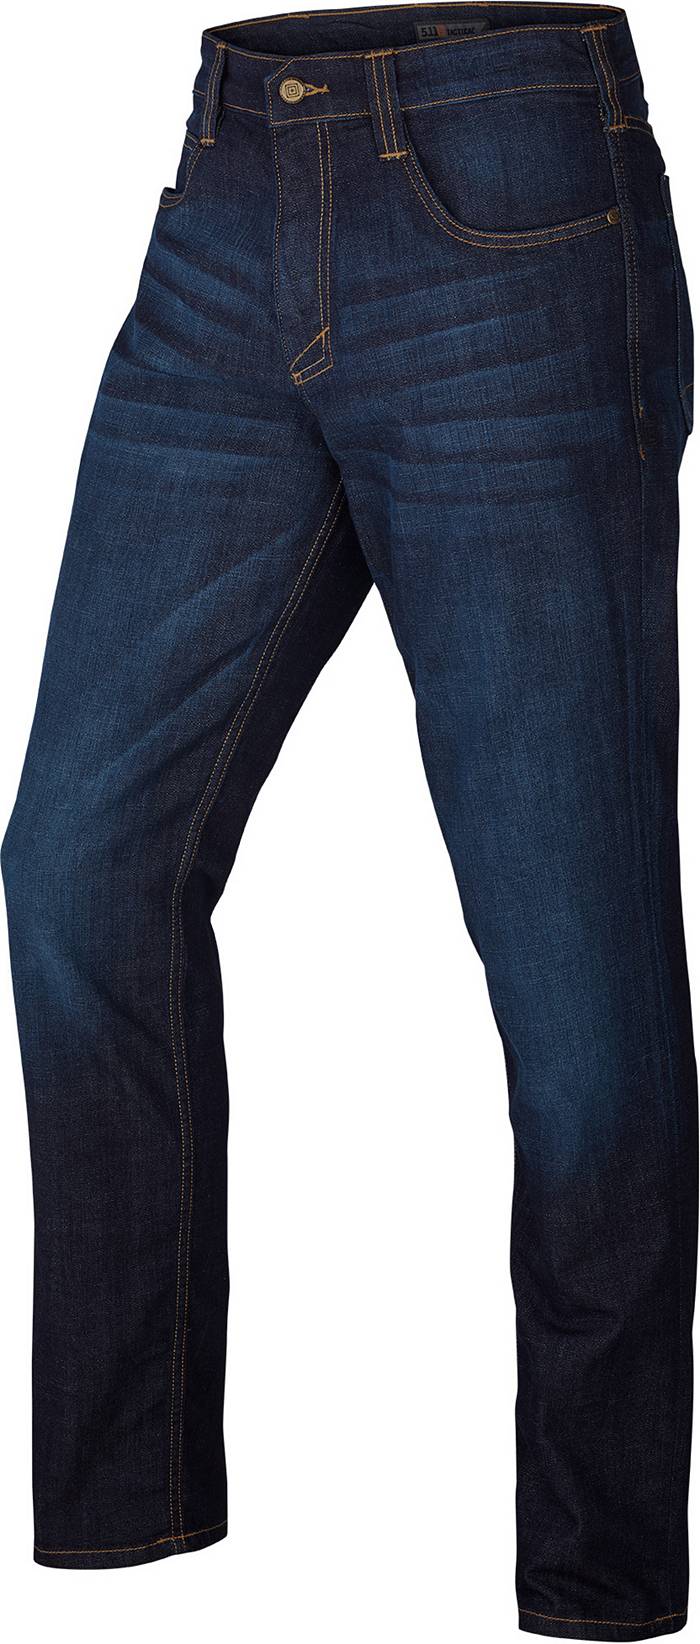 5.11 Tactical Men's Straight Leg Jeans Sporting Goods